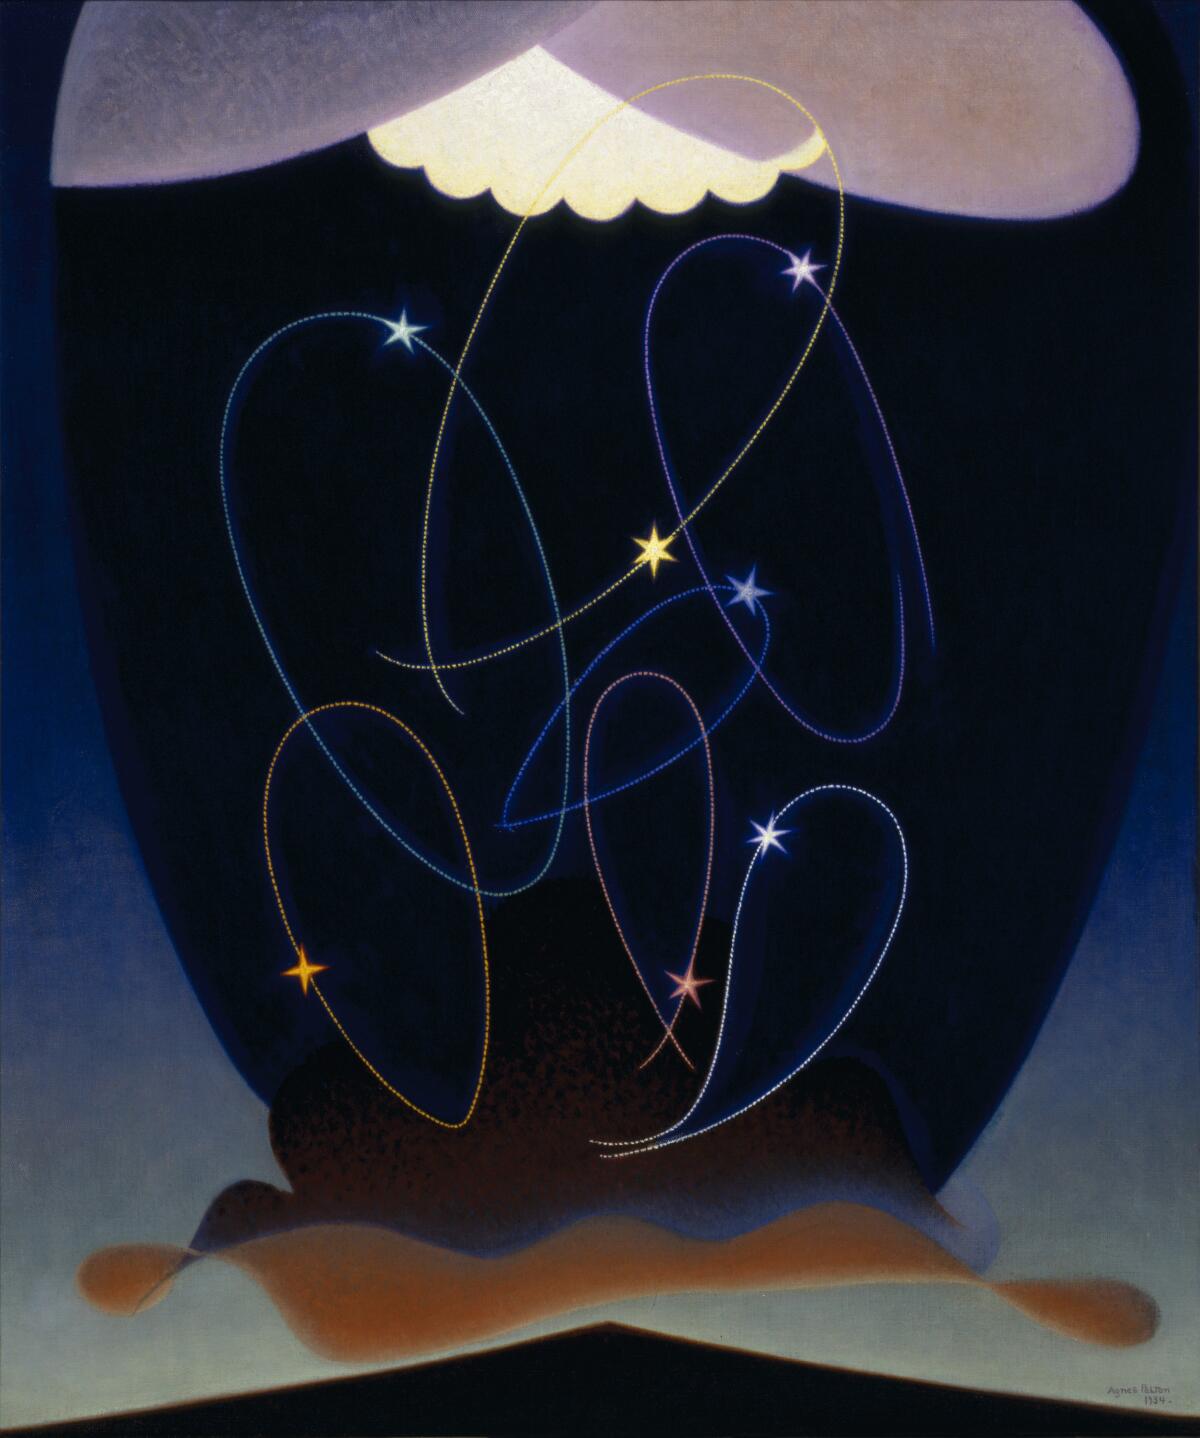 Agnes Pelton, "Orbits," 1934, oil on canvas